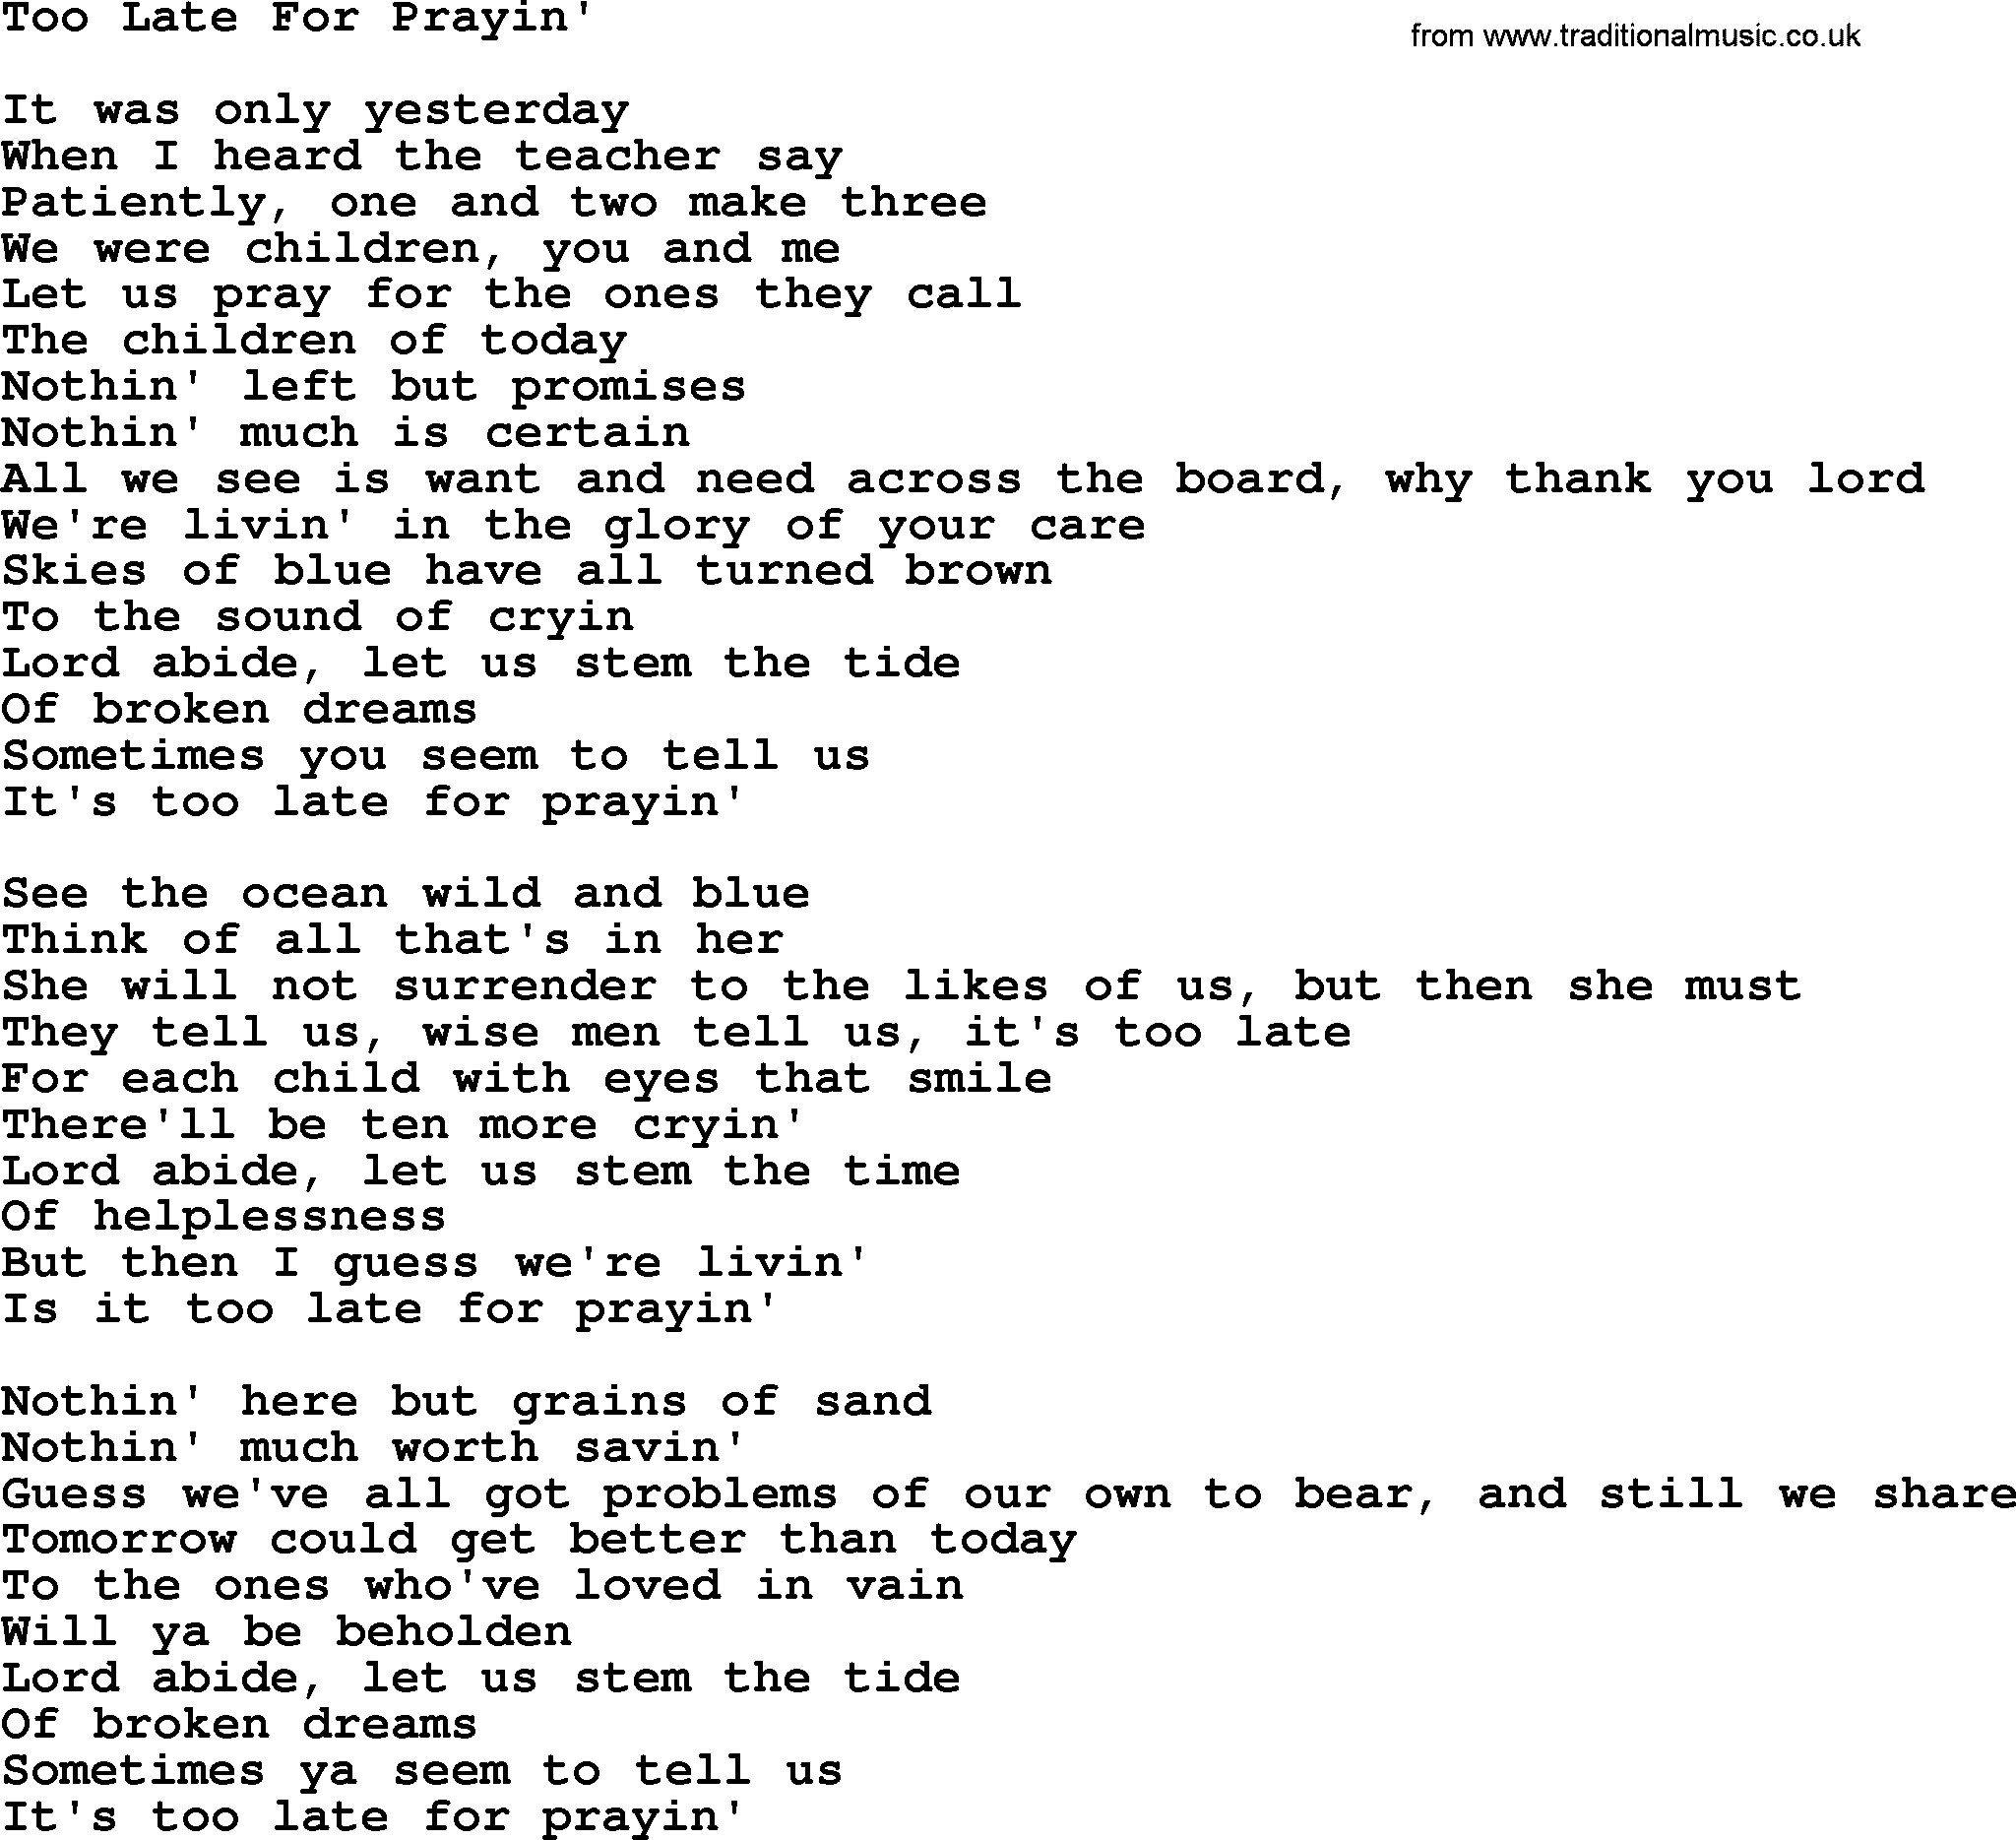 Gordon Lightfoot song Too Late For Prayin', lyrics